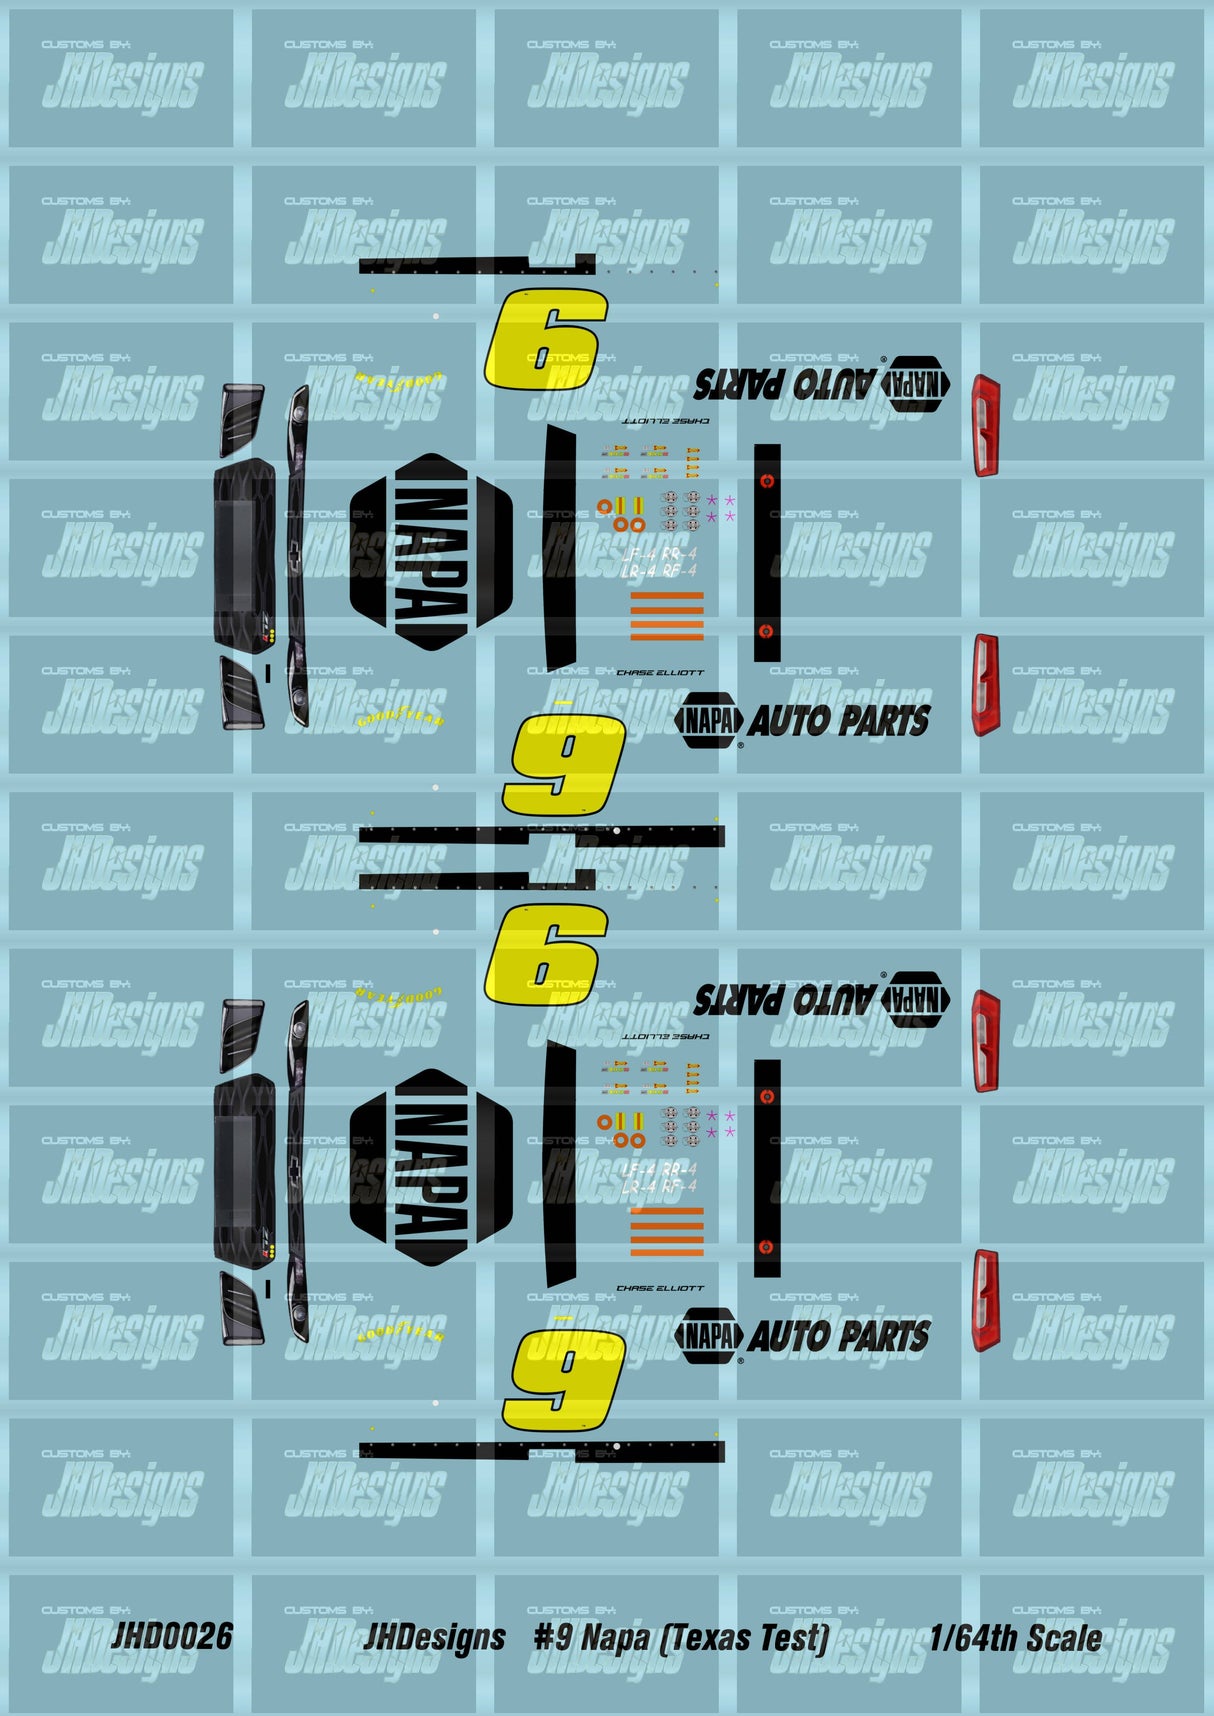 JH Designs Chase Elliott 2018 CUP #9 Napa Auto Parts (Texas Tire Test Scheme) 1:64 Racecar Decal Set